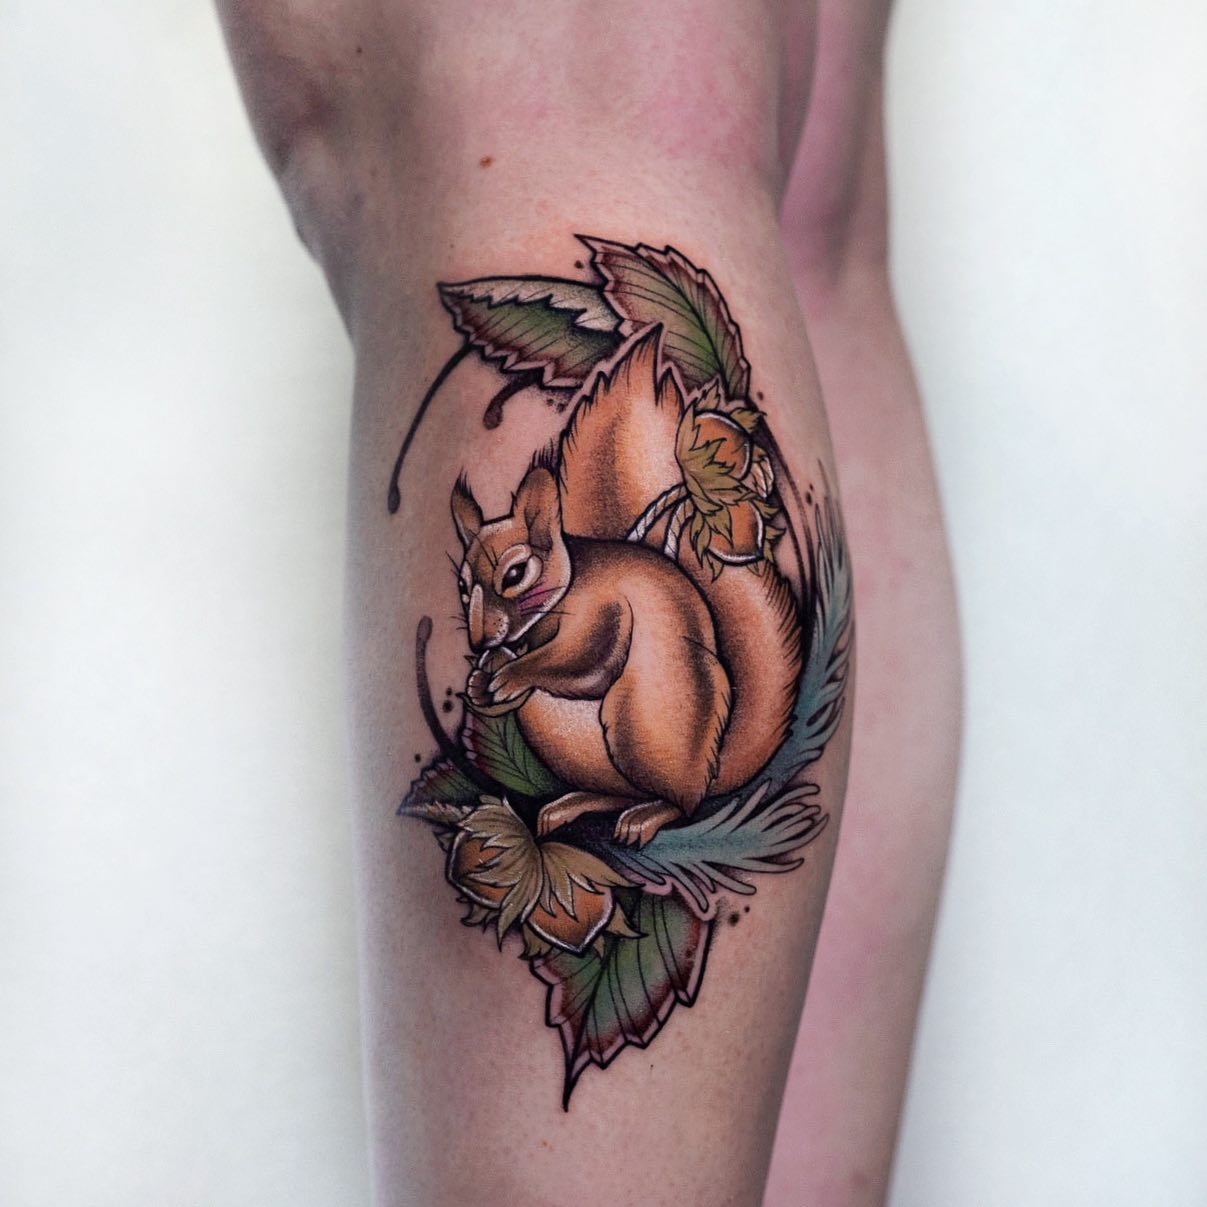 Eatin squirrel tattoos by eevee morninstar tattoo